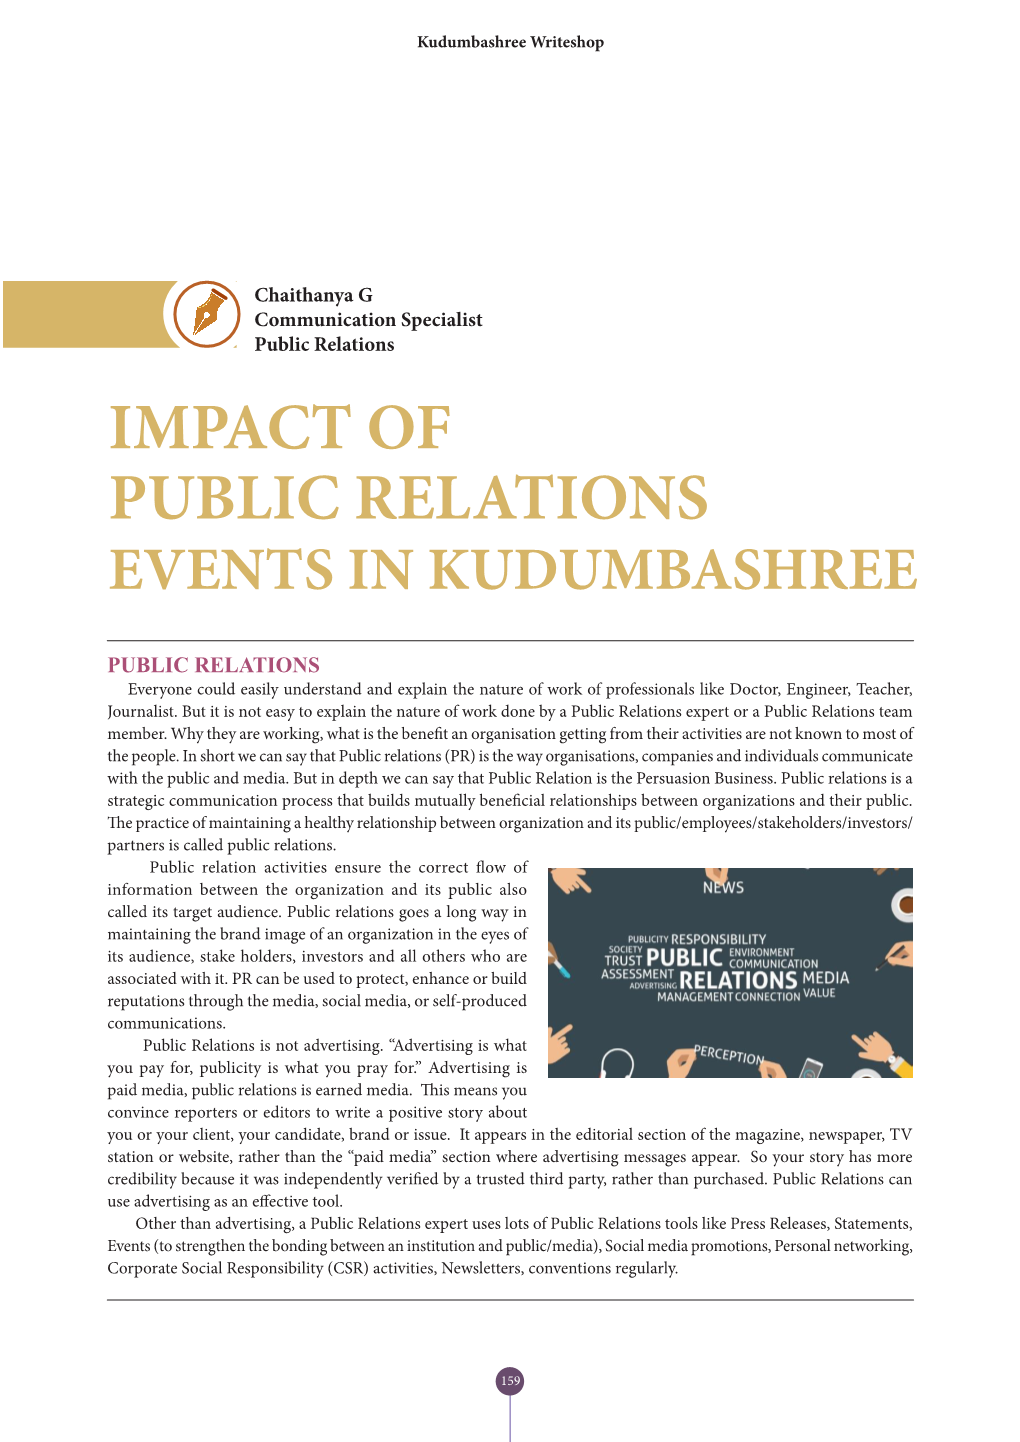 Impact of Public Relations Events in Kudumbashree